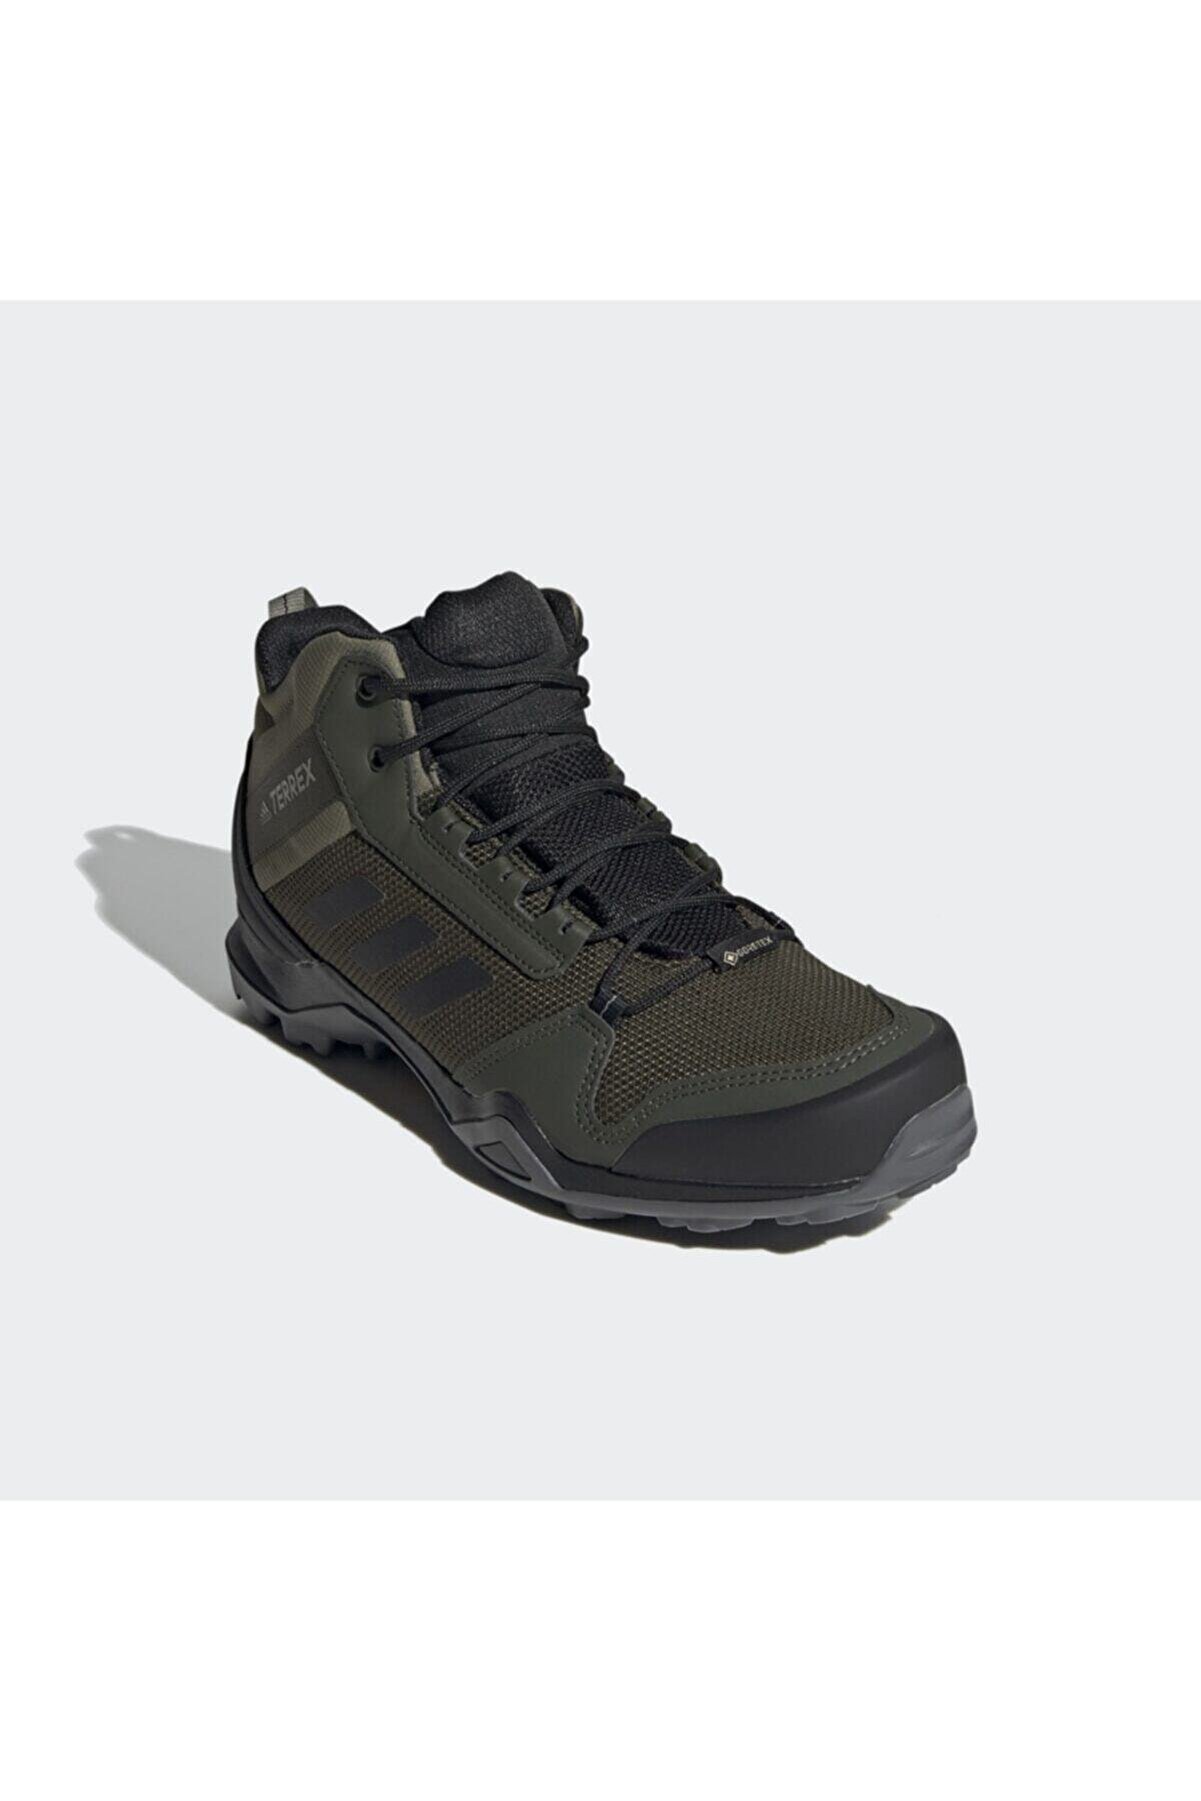 adidas Terrex Ax3 Mid Gore-tex Yürüyüş Ayakkabısı